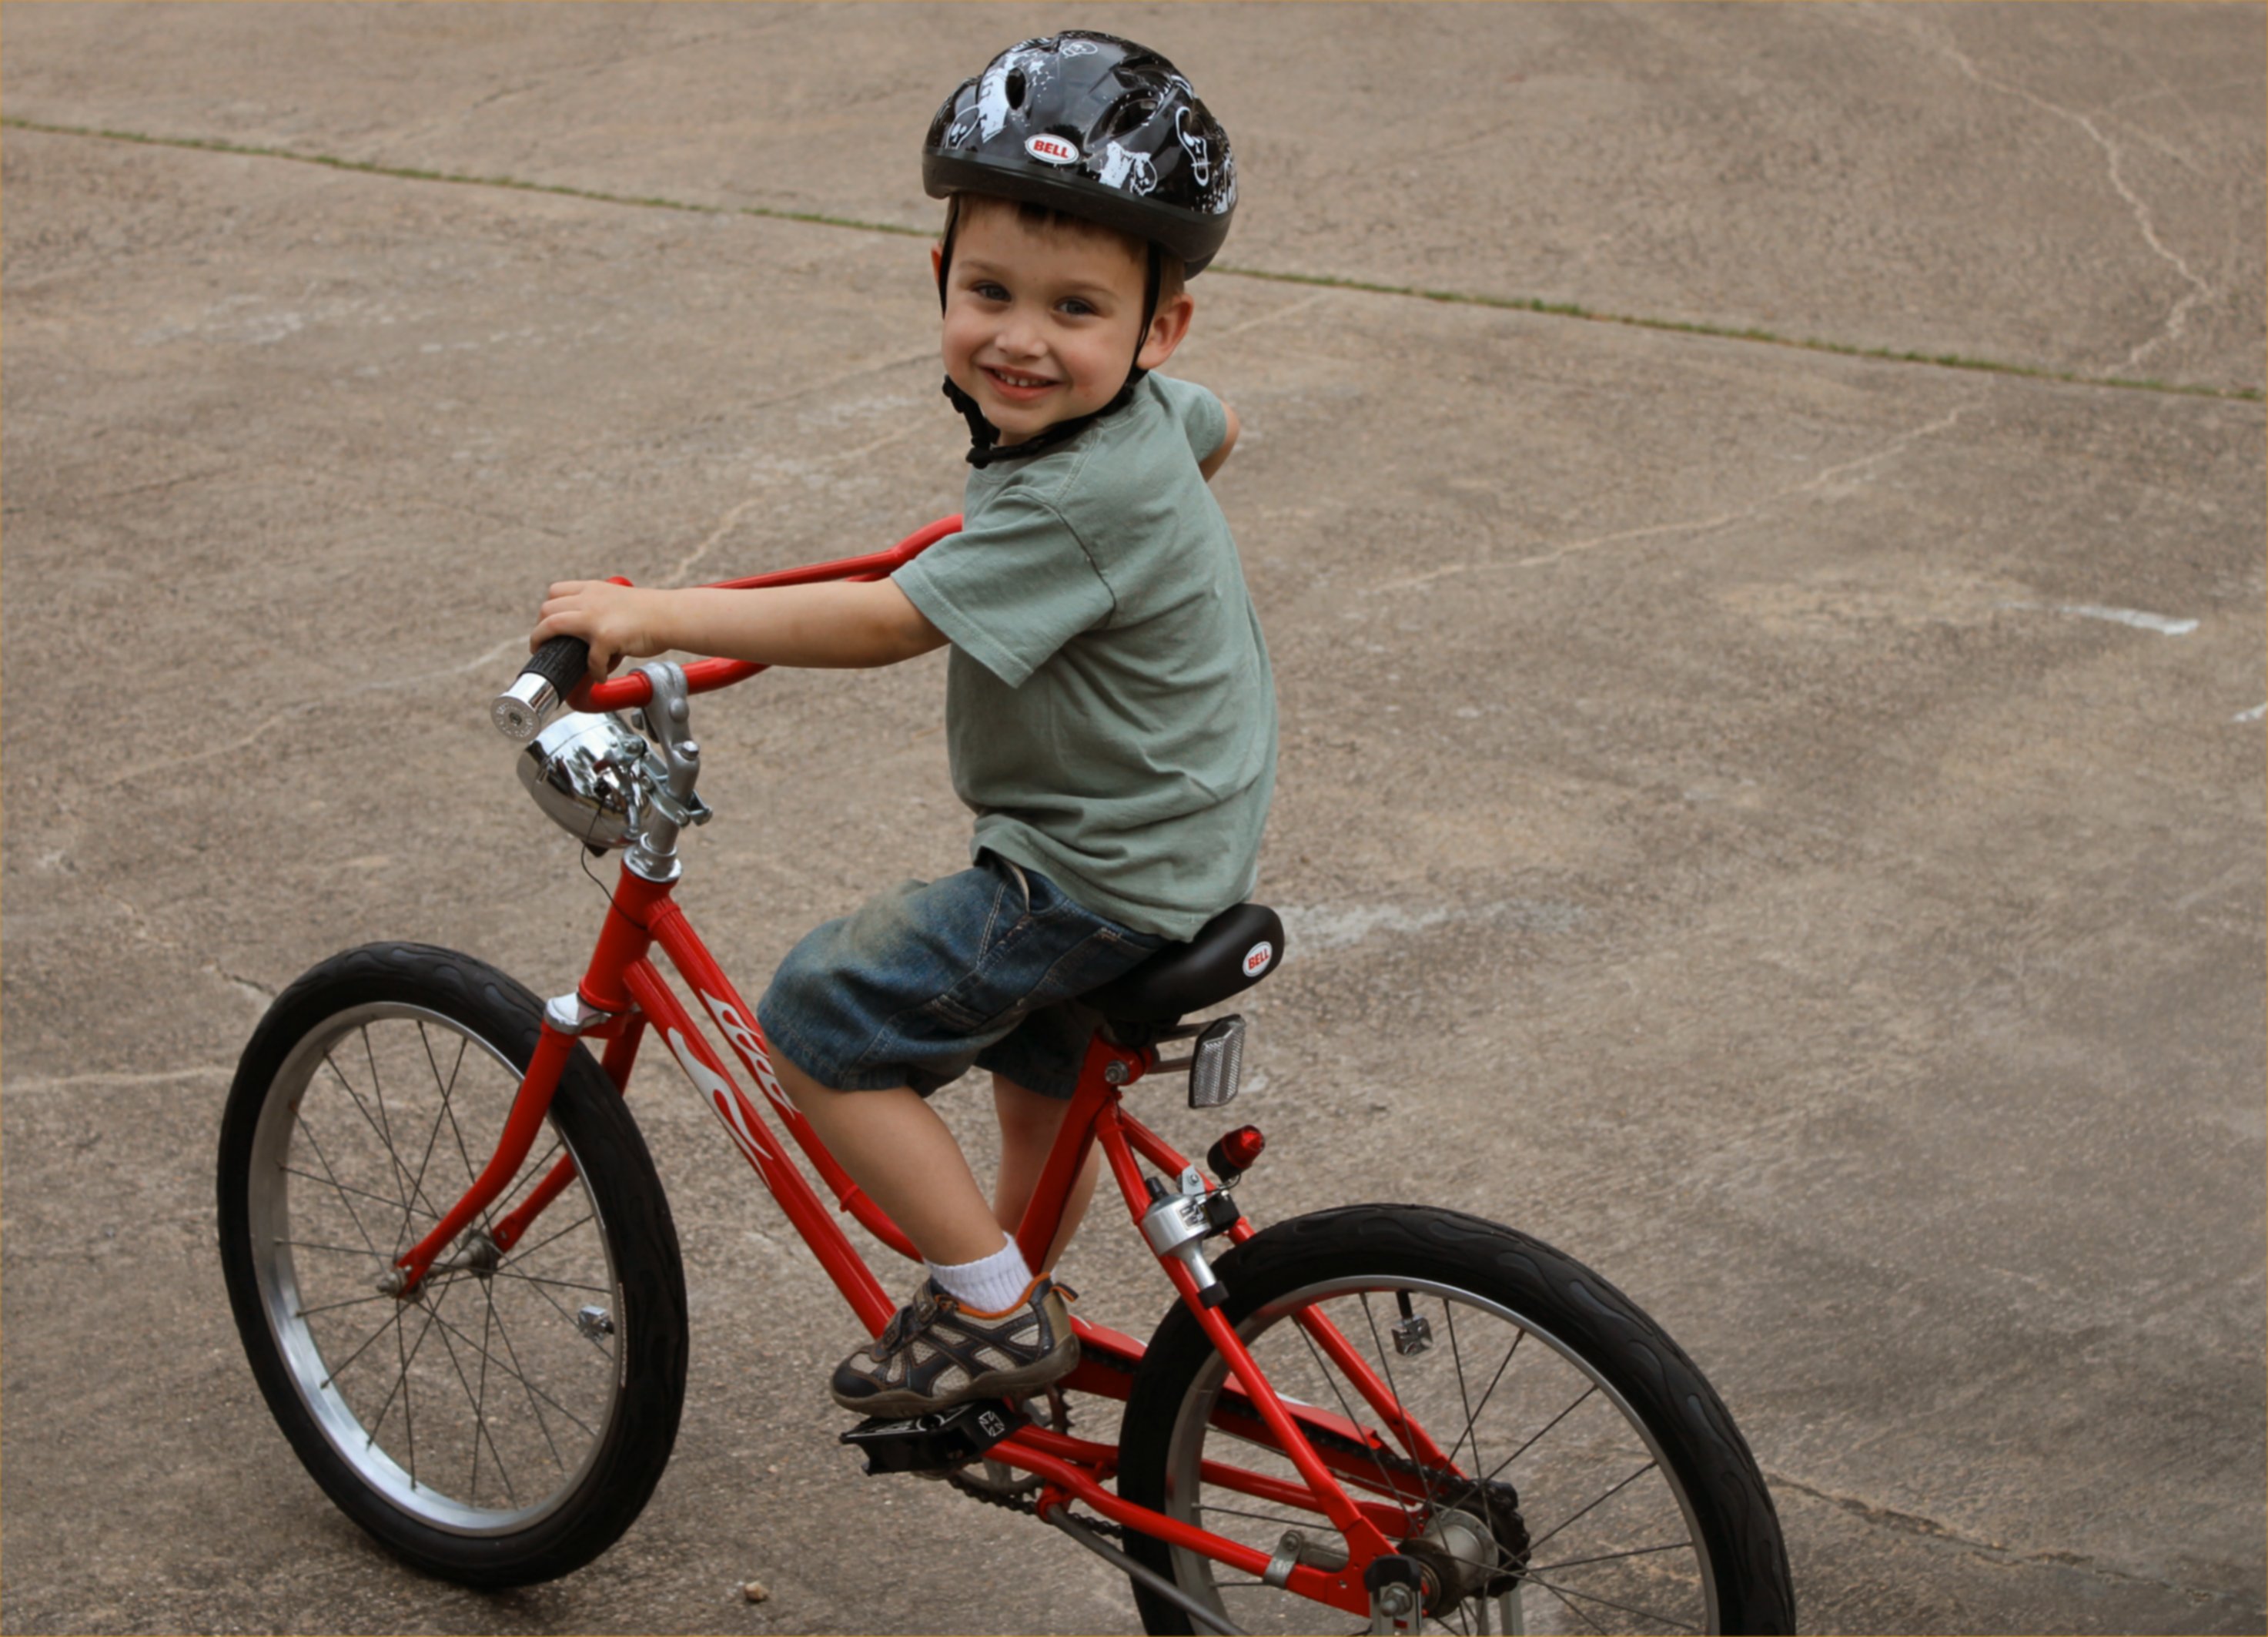 He rode a bike yesterday. Велосипед Sweet Kids. Ride a Bike. Велосипед Boysa. Маленький би байк.